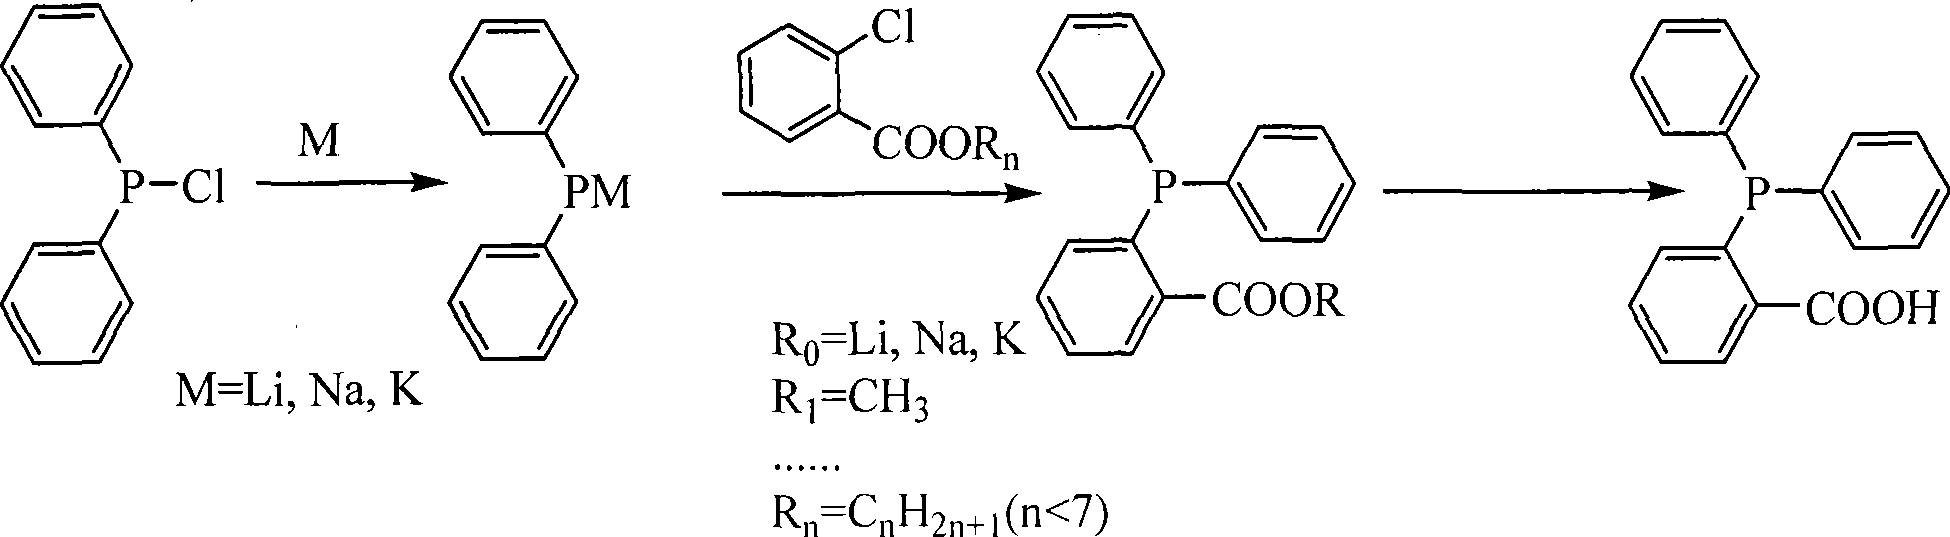 Process for synthesizing O-diphenylphosphinolbenzoic acid